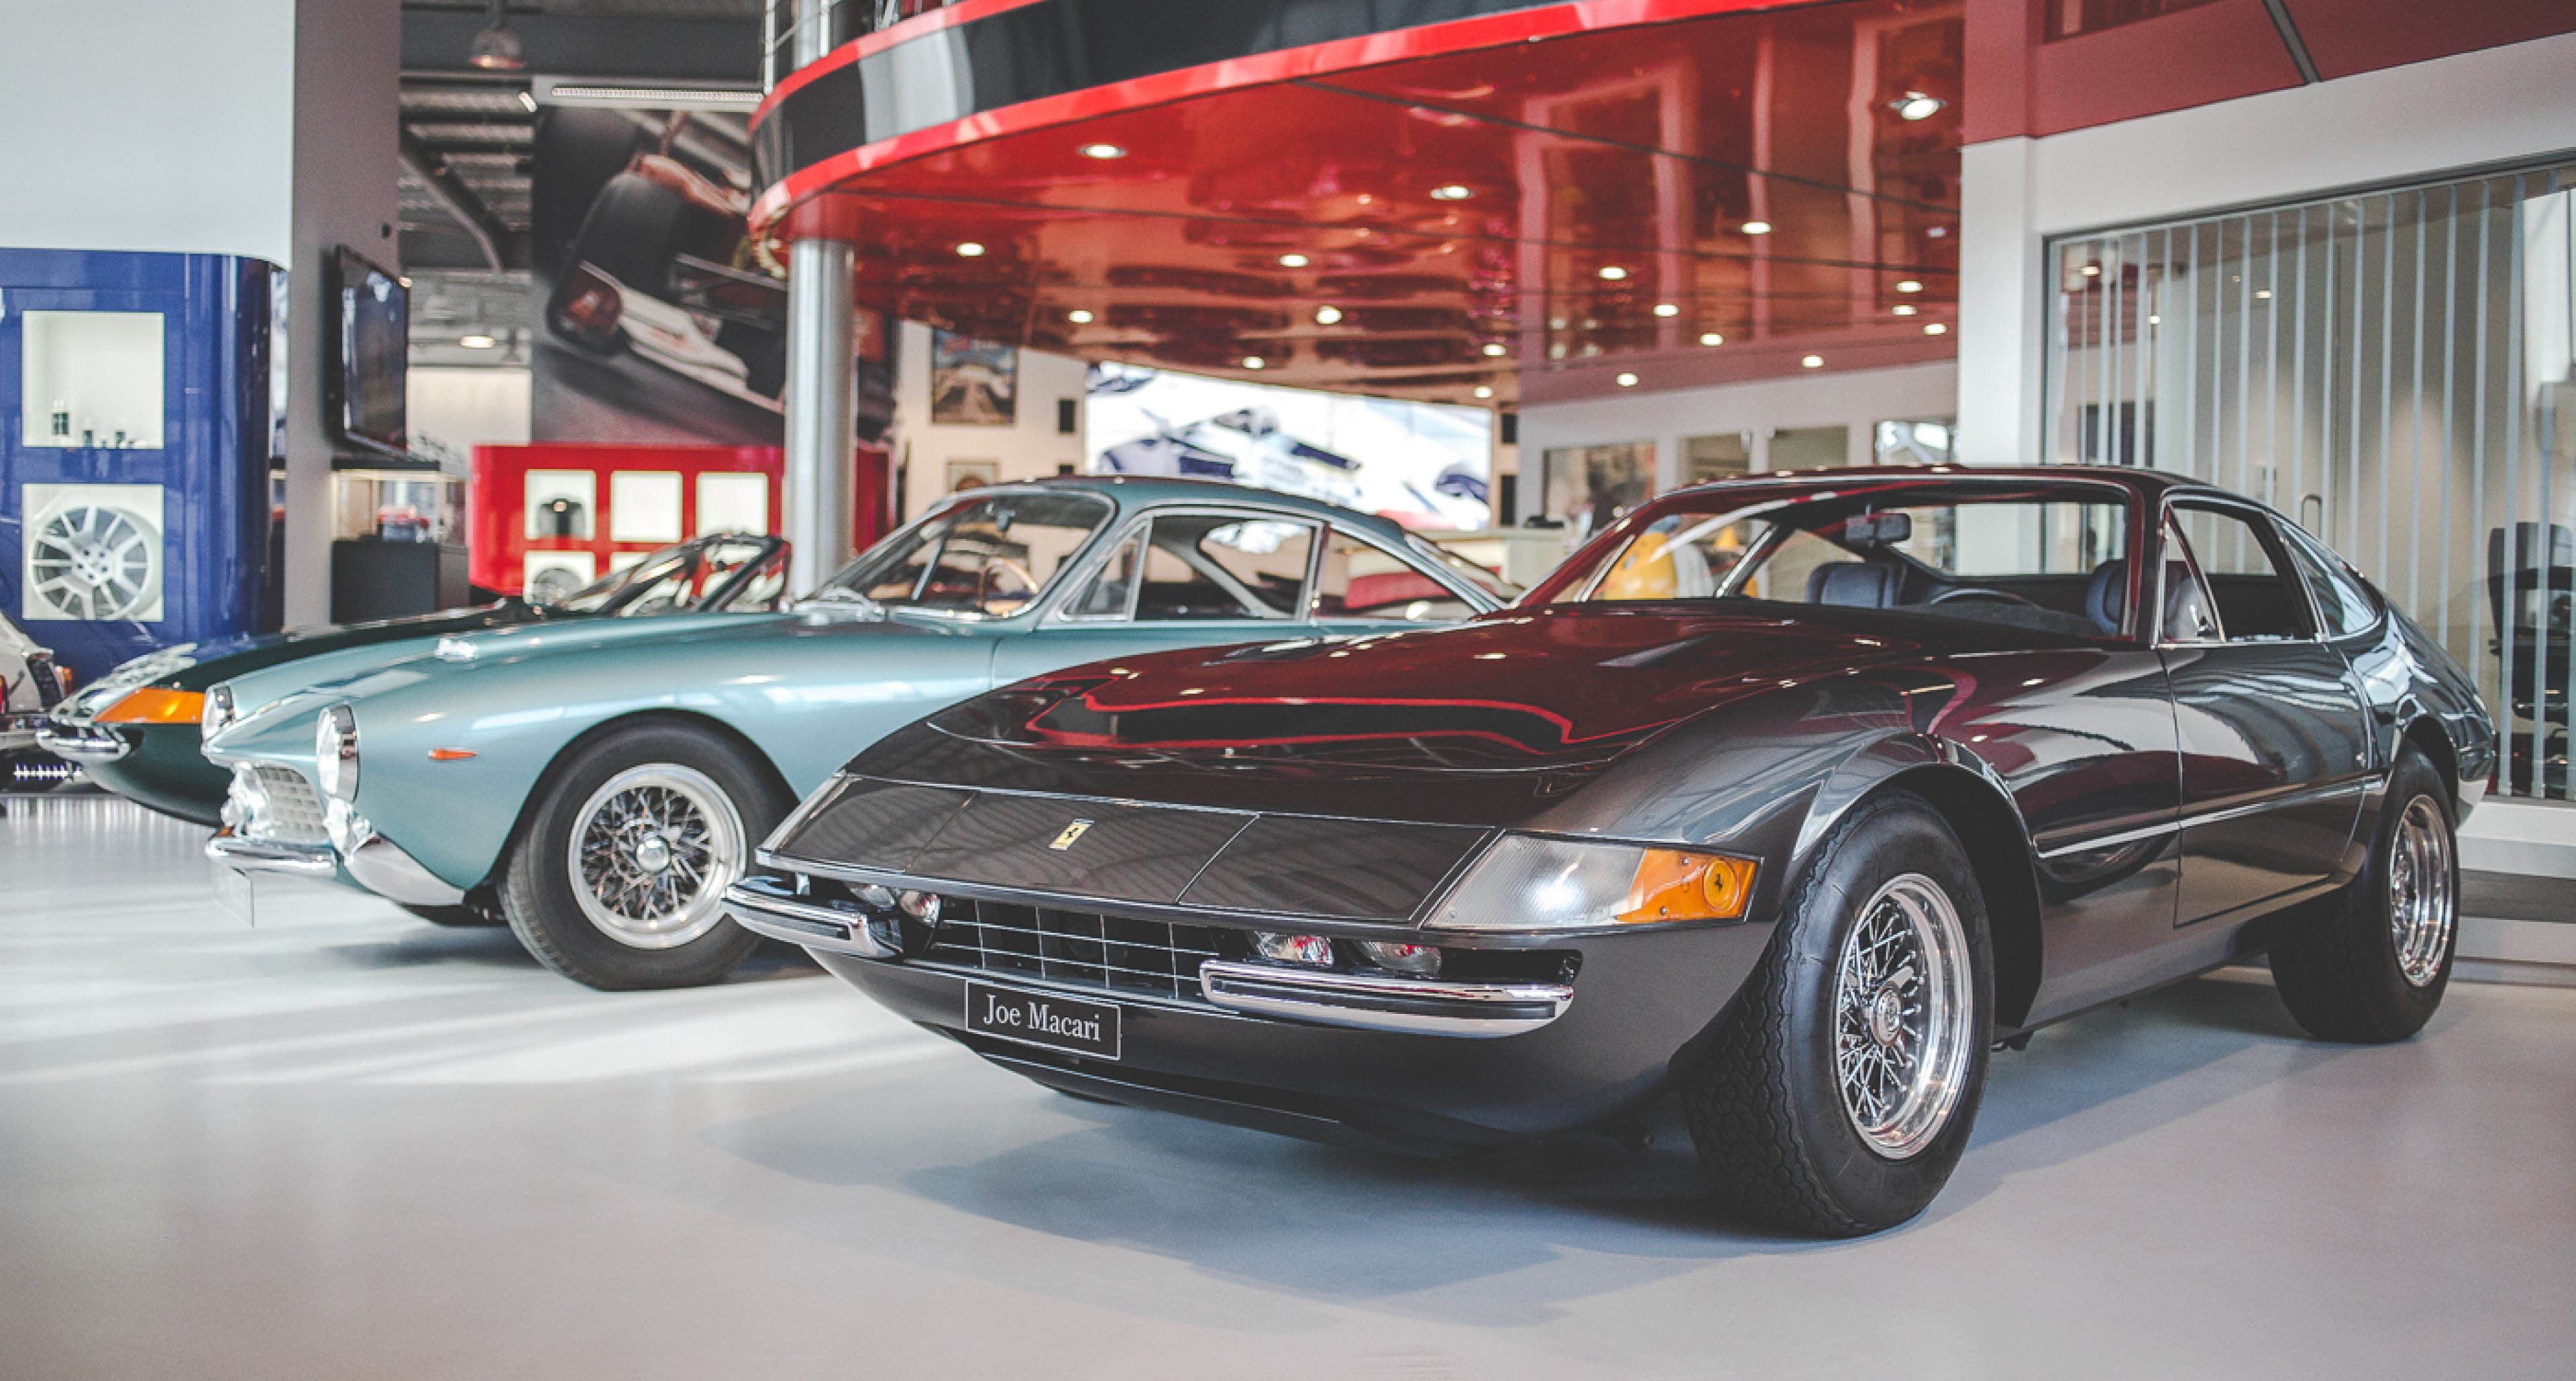 Trading collectors cars is an Italian Job for Joe Macari | Classic ...